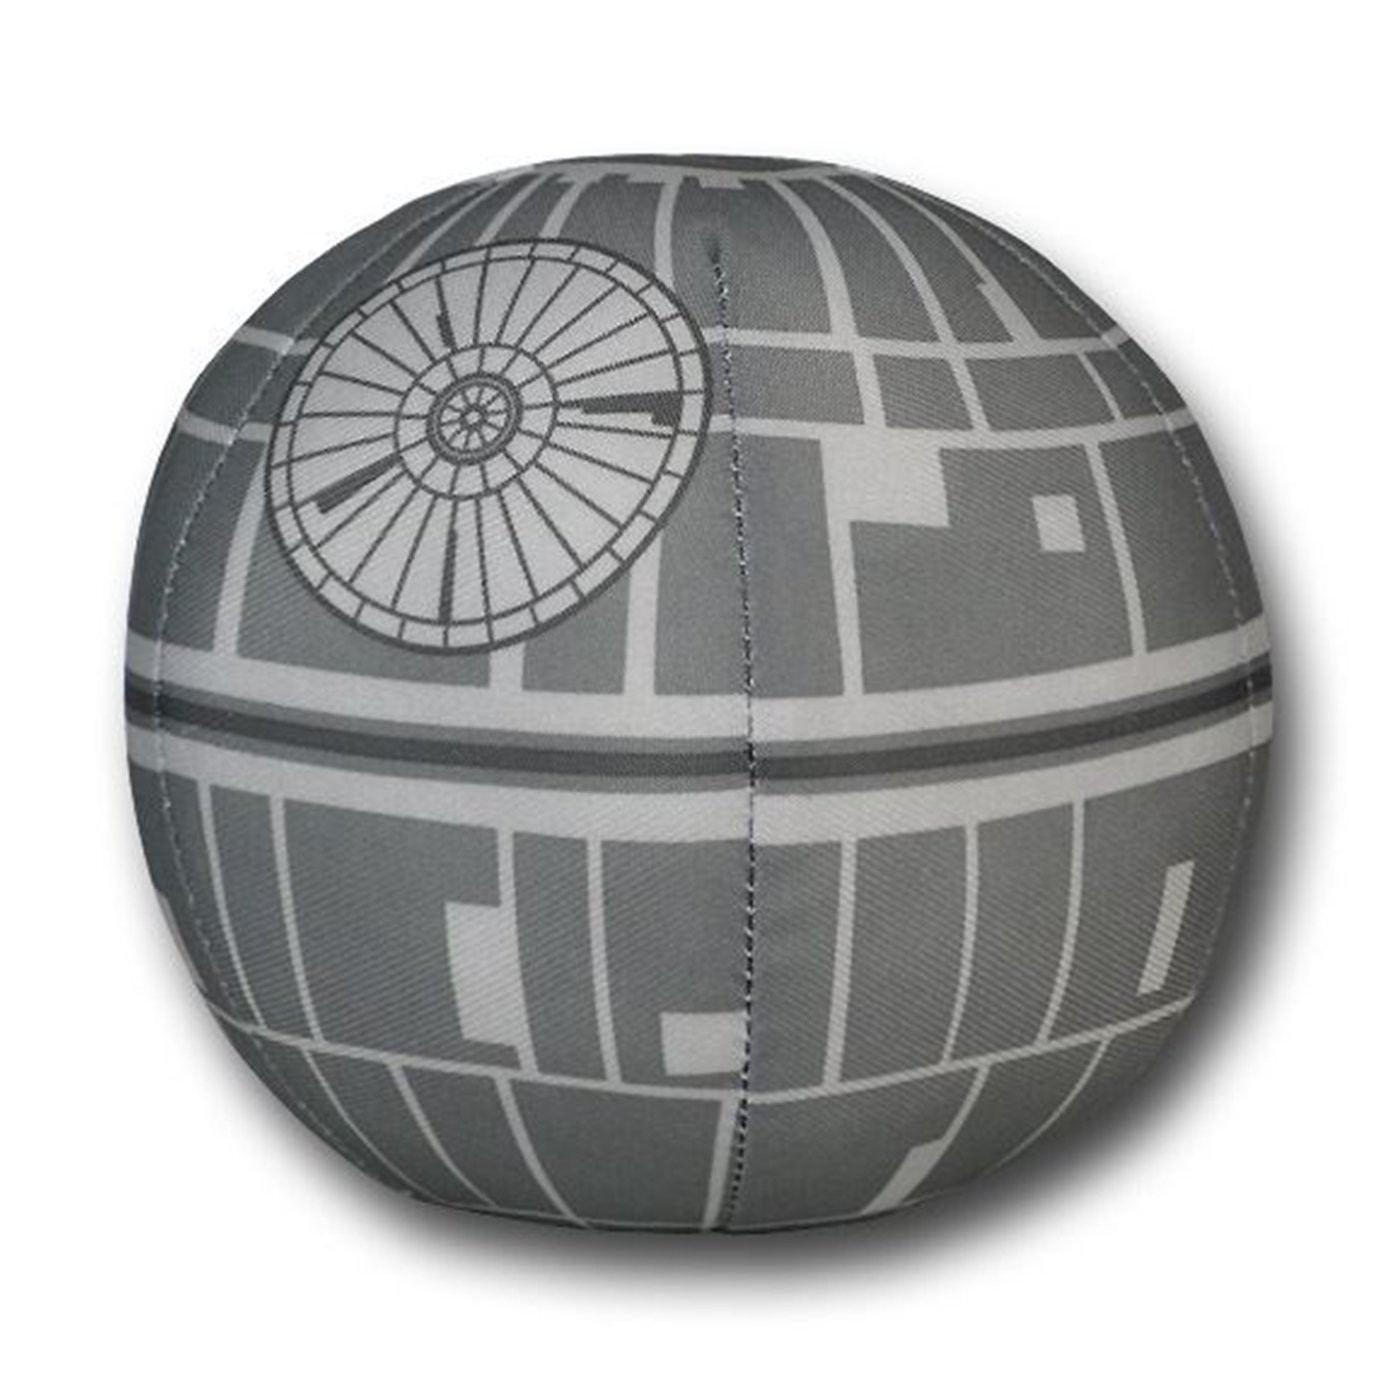 Star Wars Death Star Plush Toy